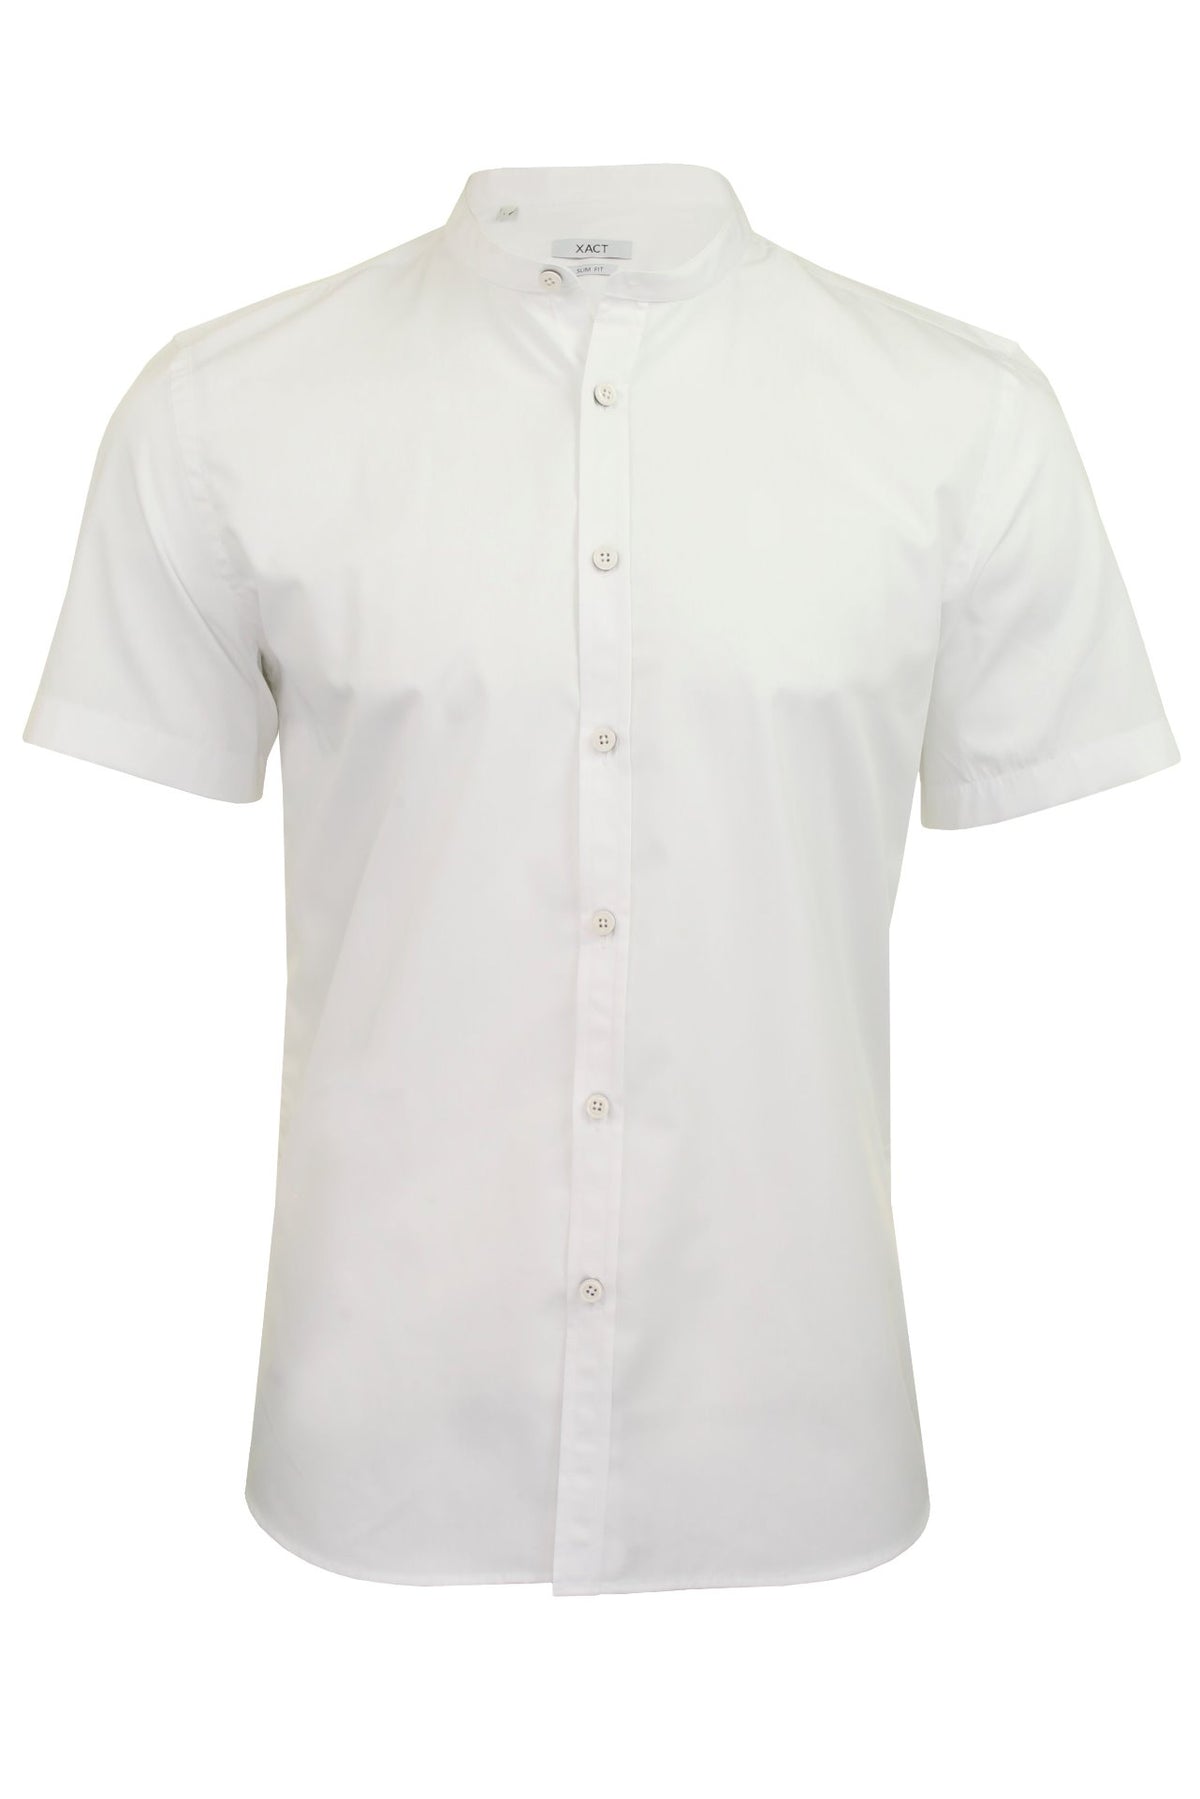 Xact Mens Grandad Collar Poplin Shirt Nehru - Short Sleeved - Slim Fit, 01, Xsh1069, White